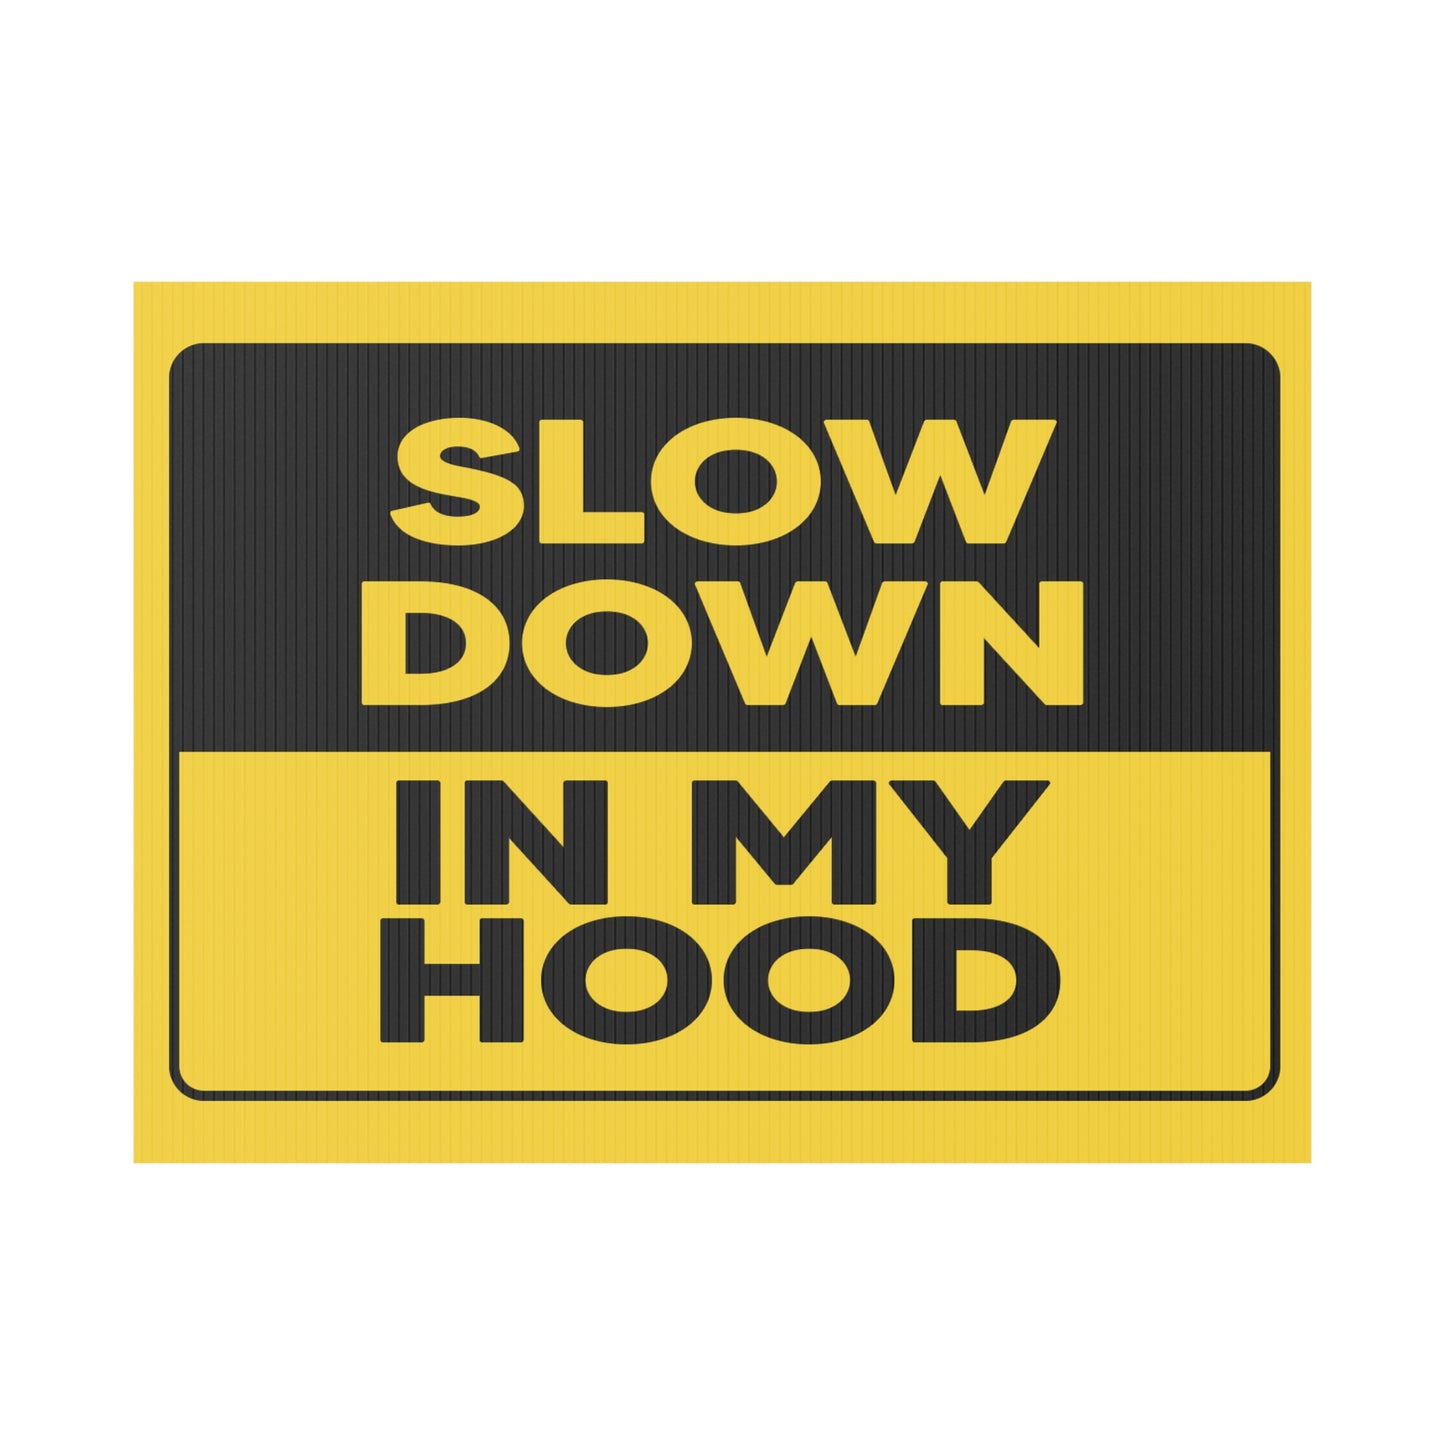 Slow Down In My Hood Yard Sign